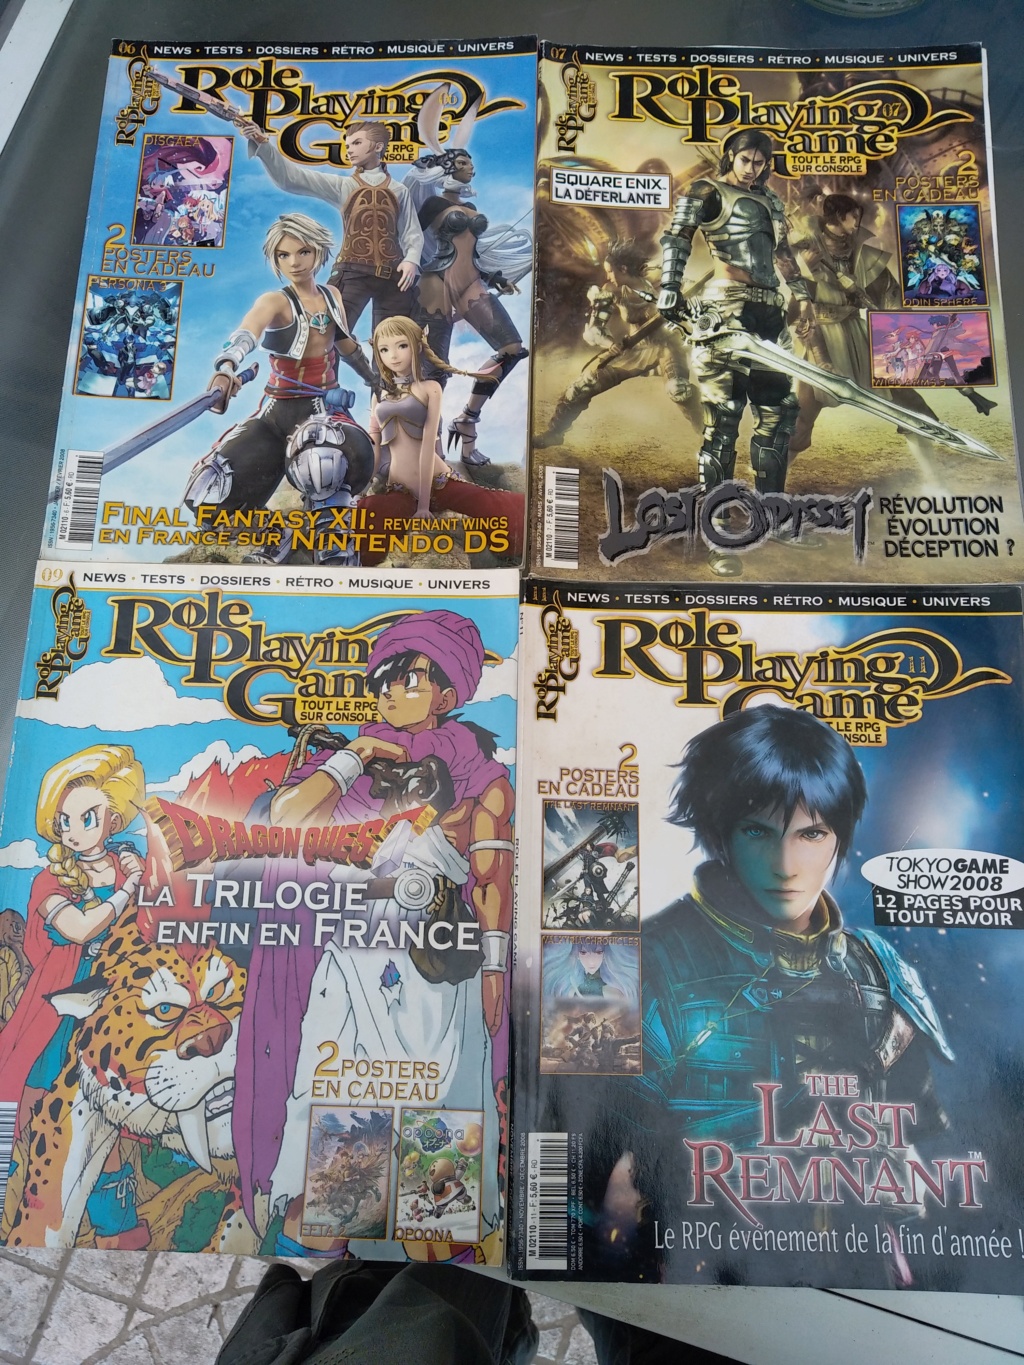 [VENDU] Magazines jeux vidéo "Background", "RPG" et "Gameplay rpg" Img_2082